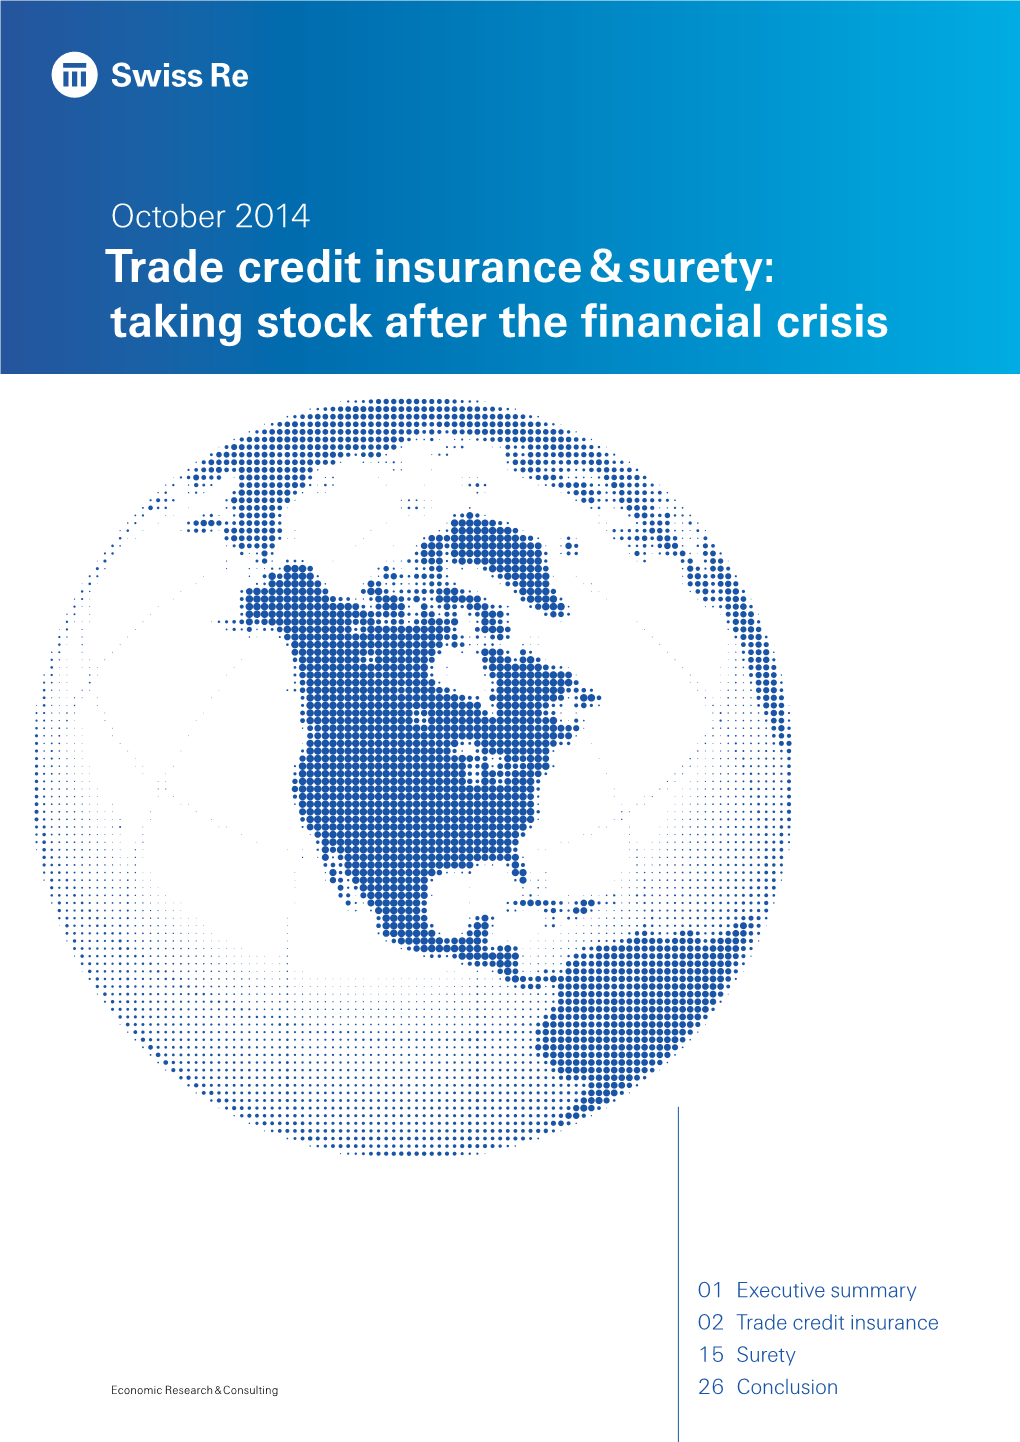 Trade Credit Insurance & Surety